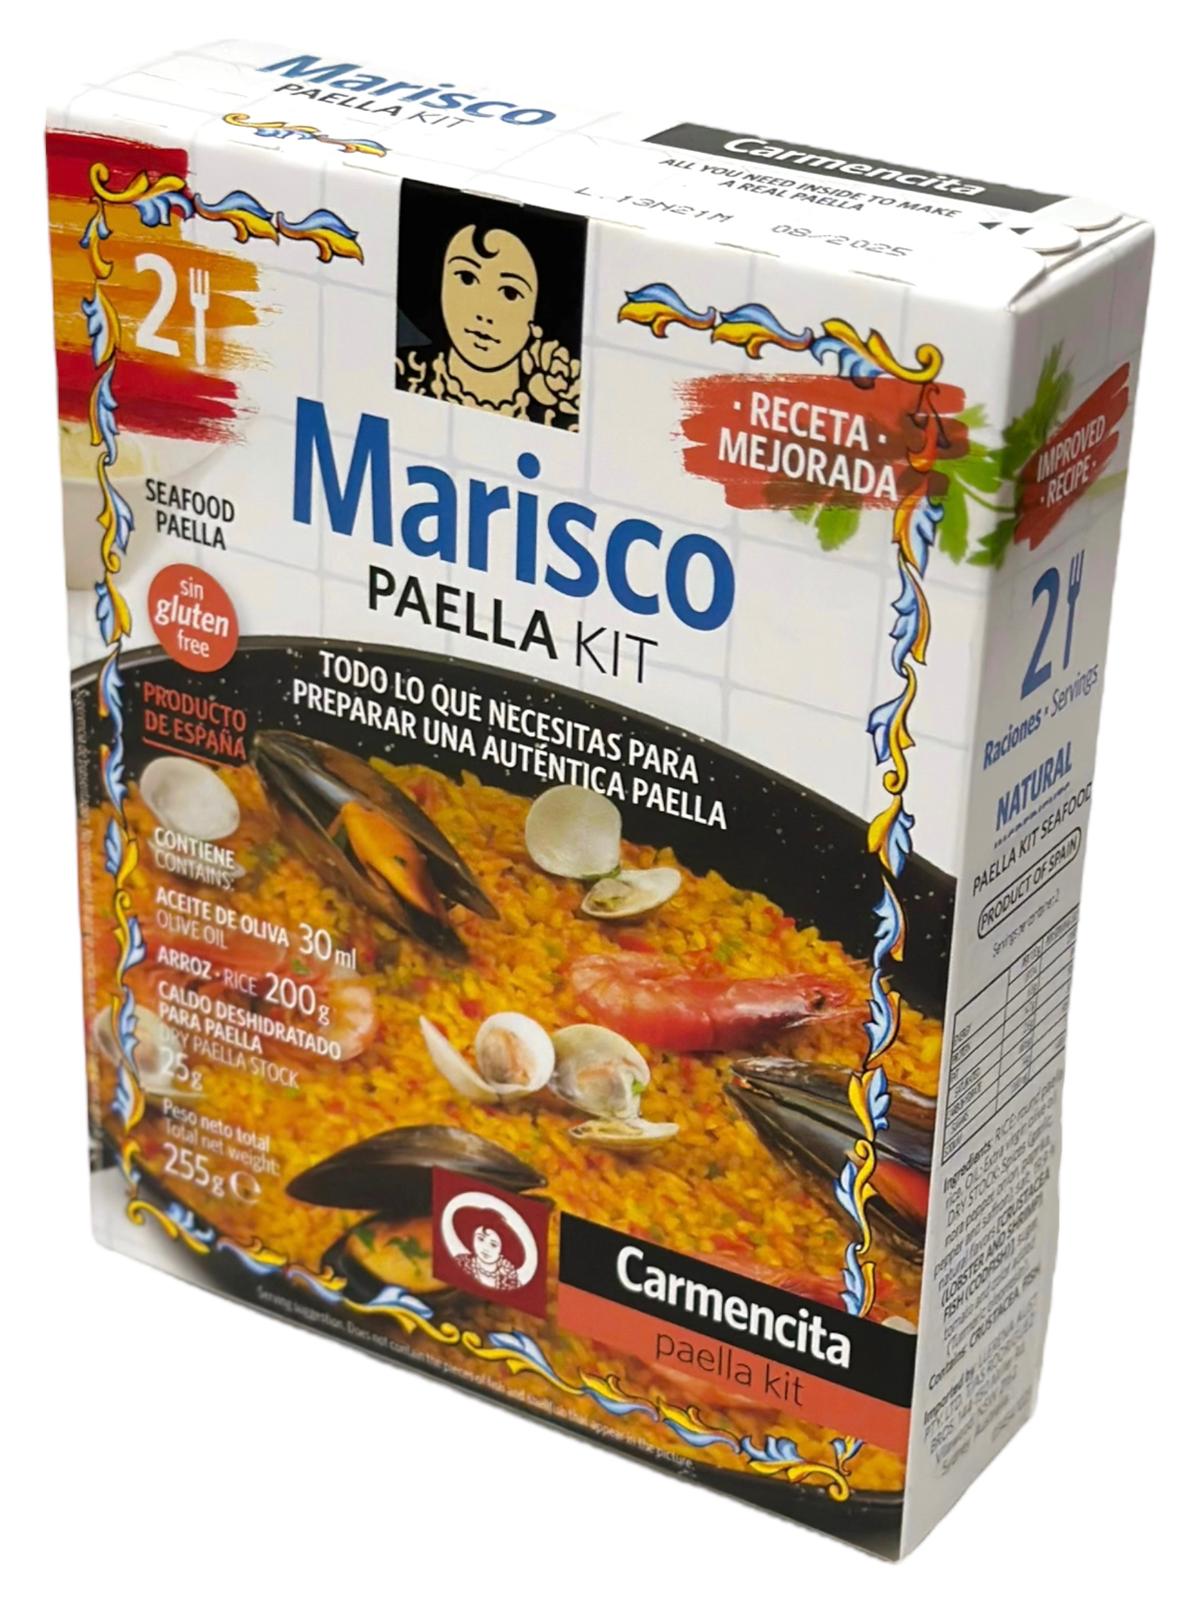 Carmencita Marisco Seafood Paella Kit 255g Twin Pack 510g total